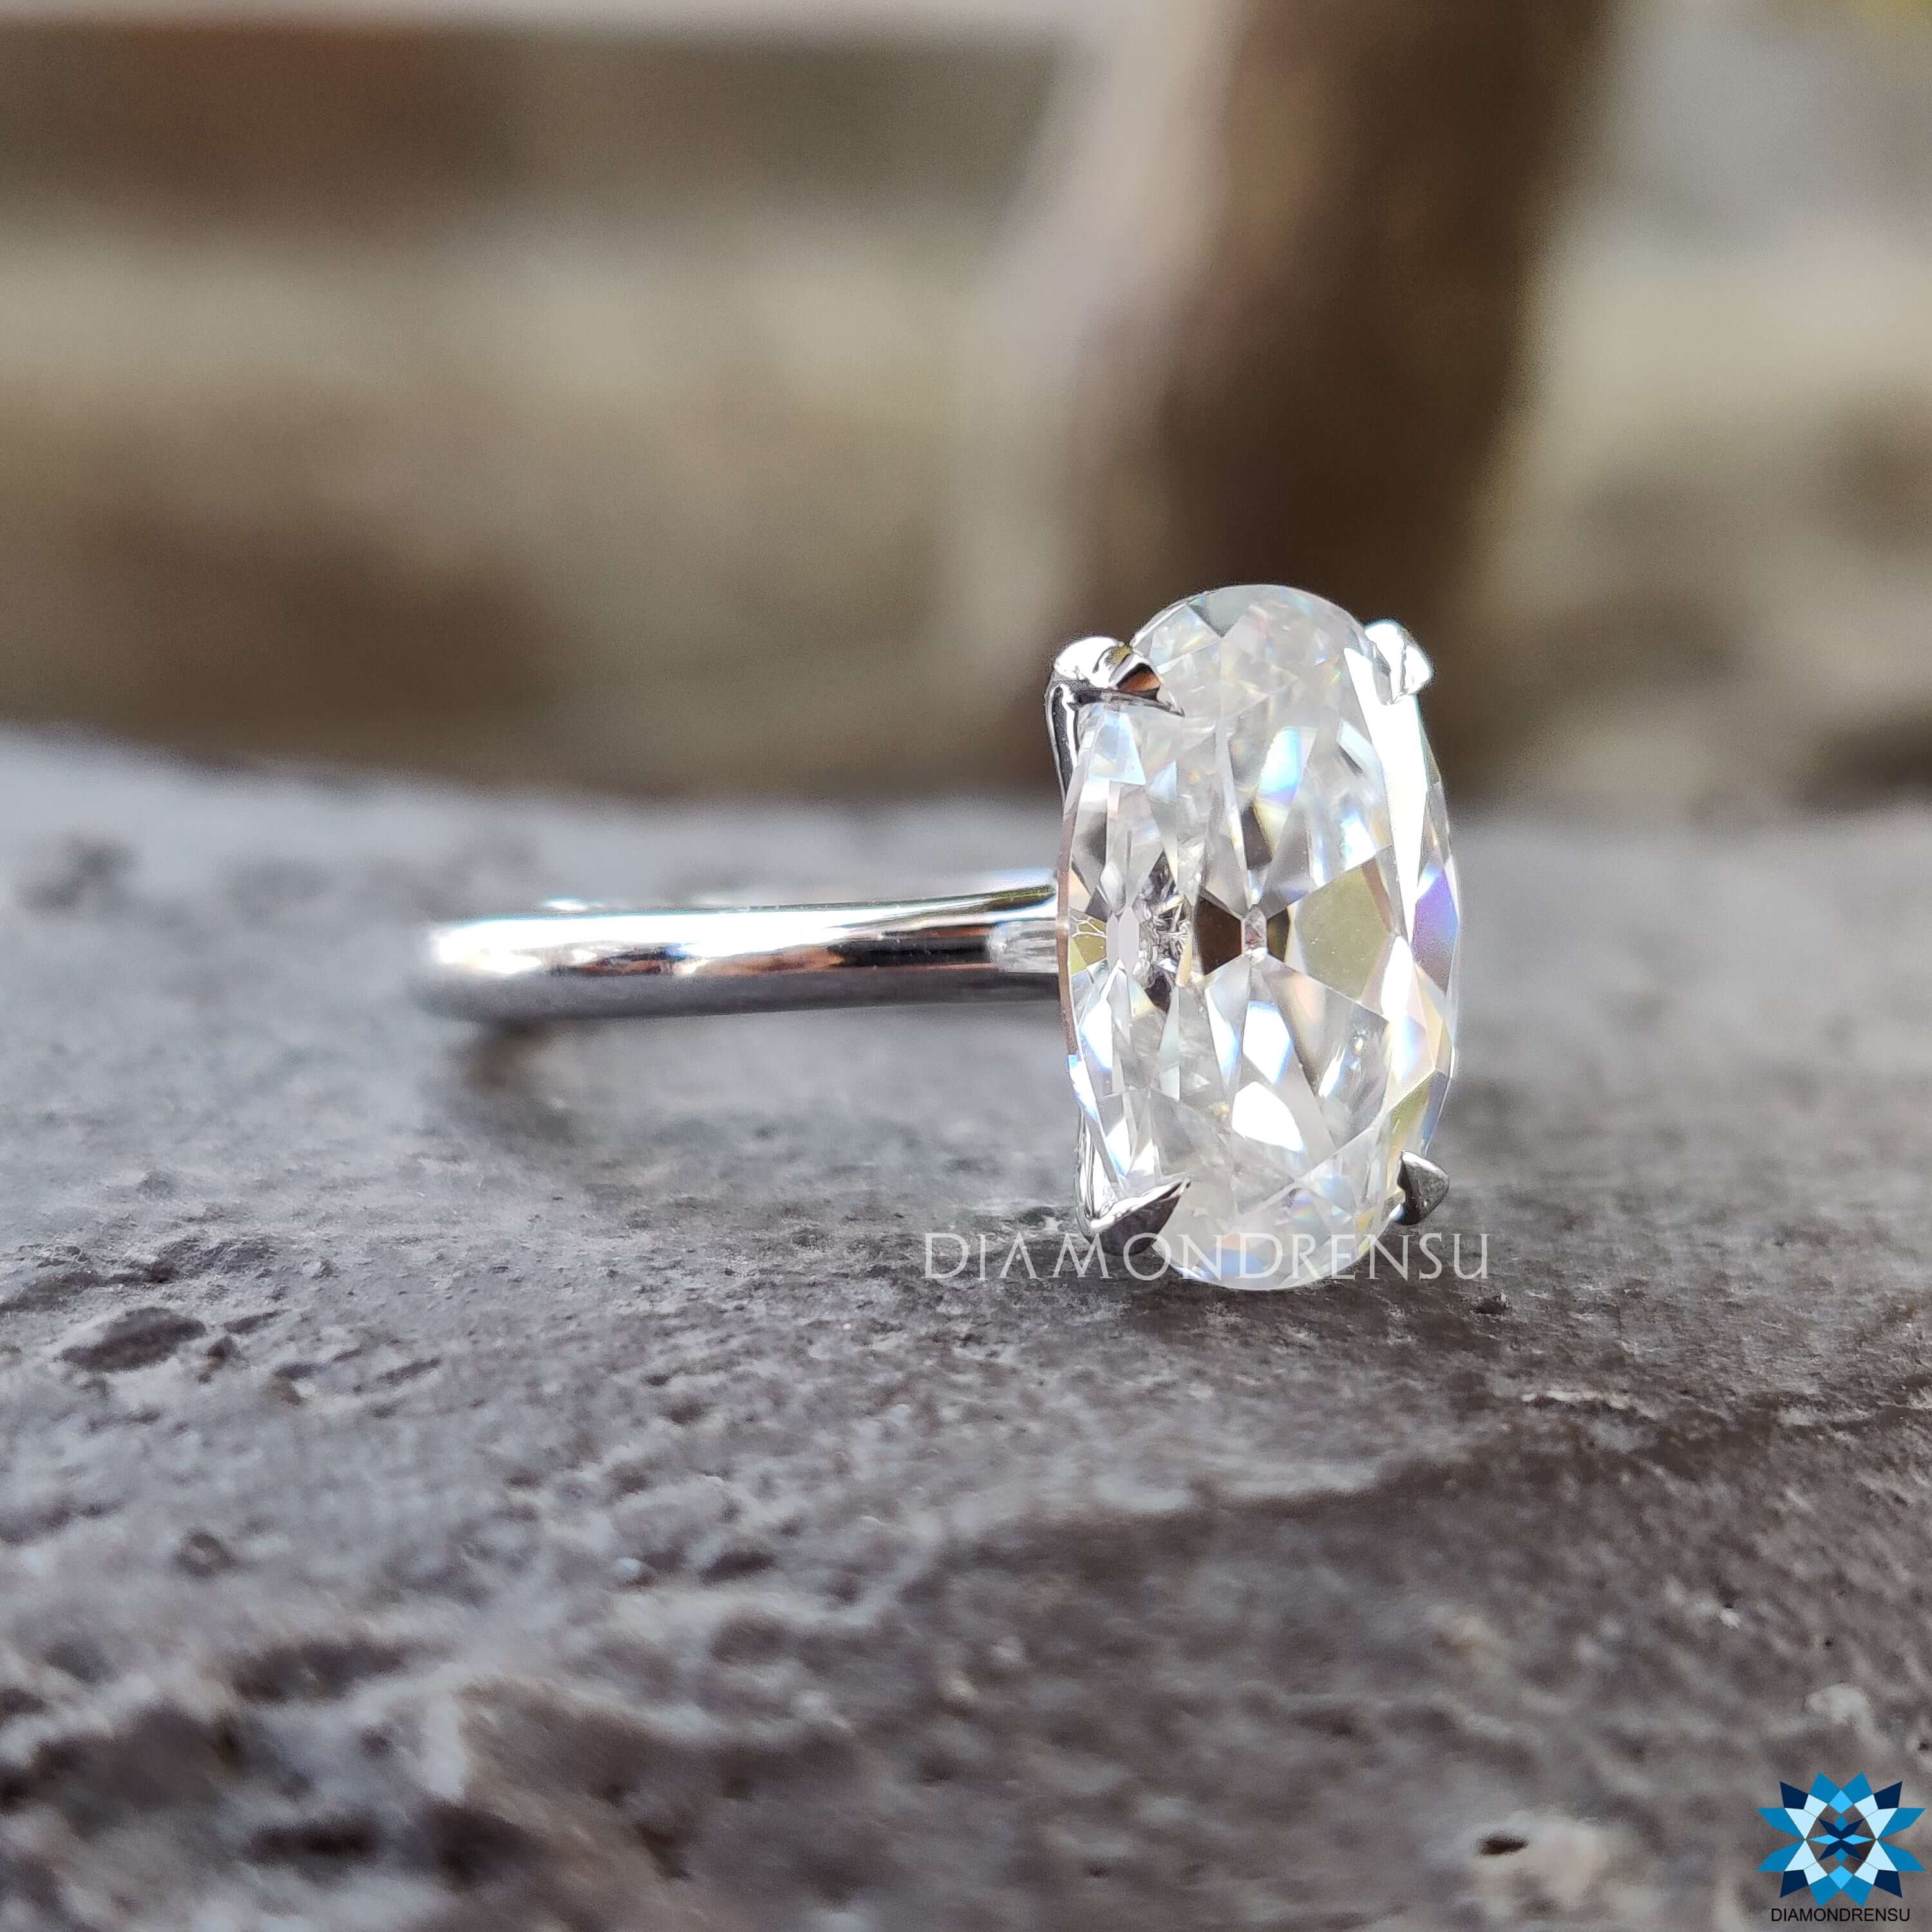 moval cut engagement ring - diamondrensu